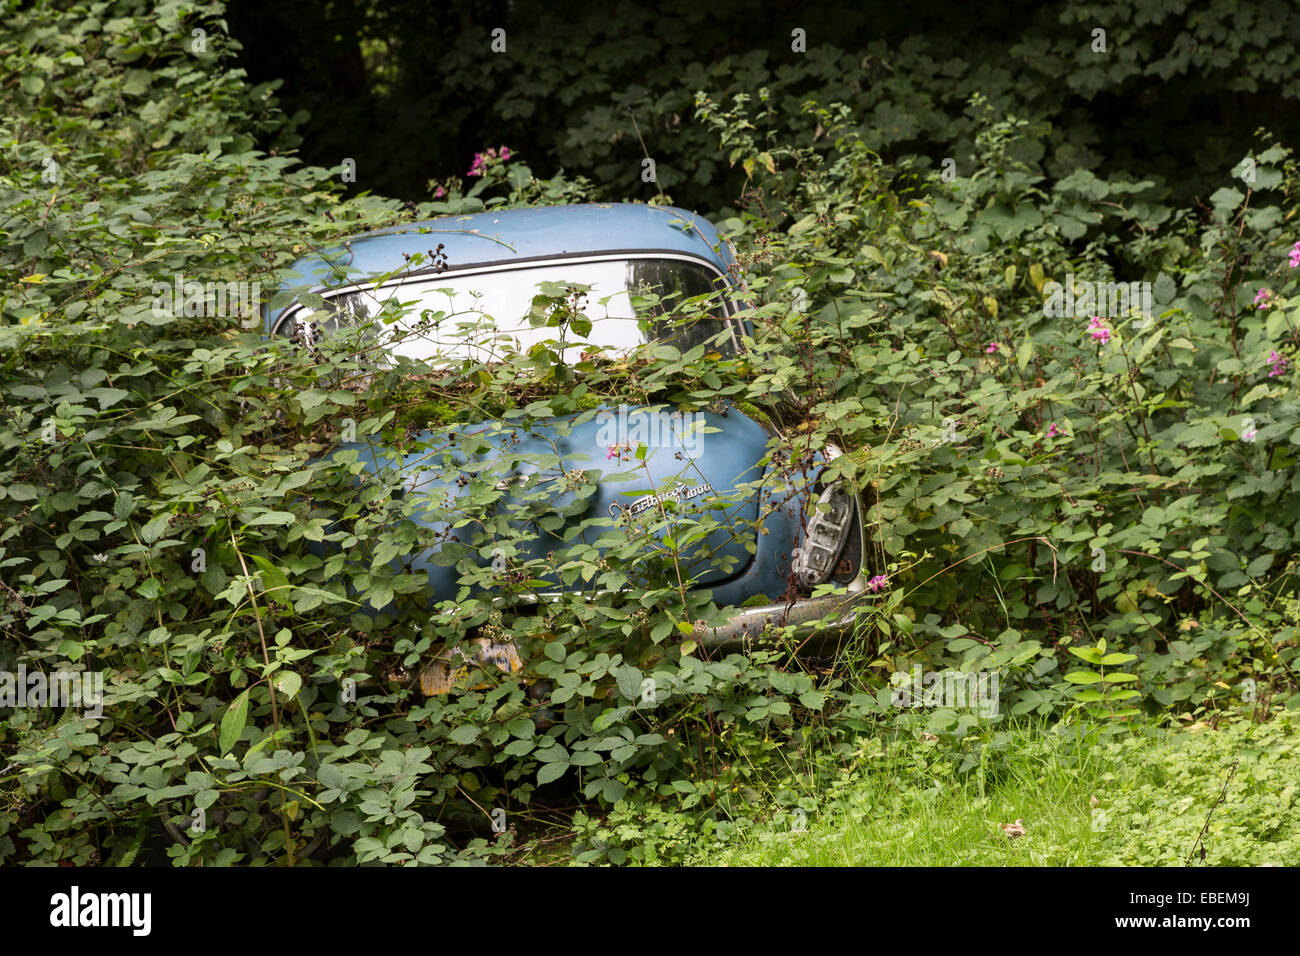 Car abandoned in woodland and overgrown, Abergavenny, Wales, UK Stock Photo